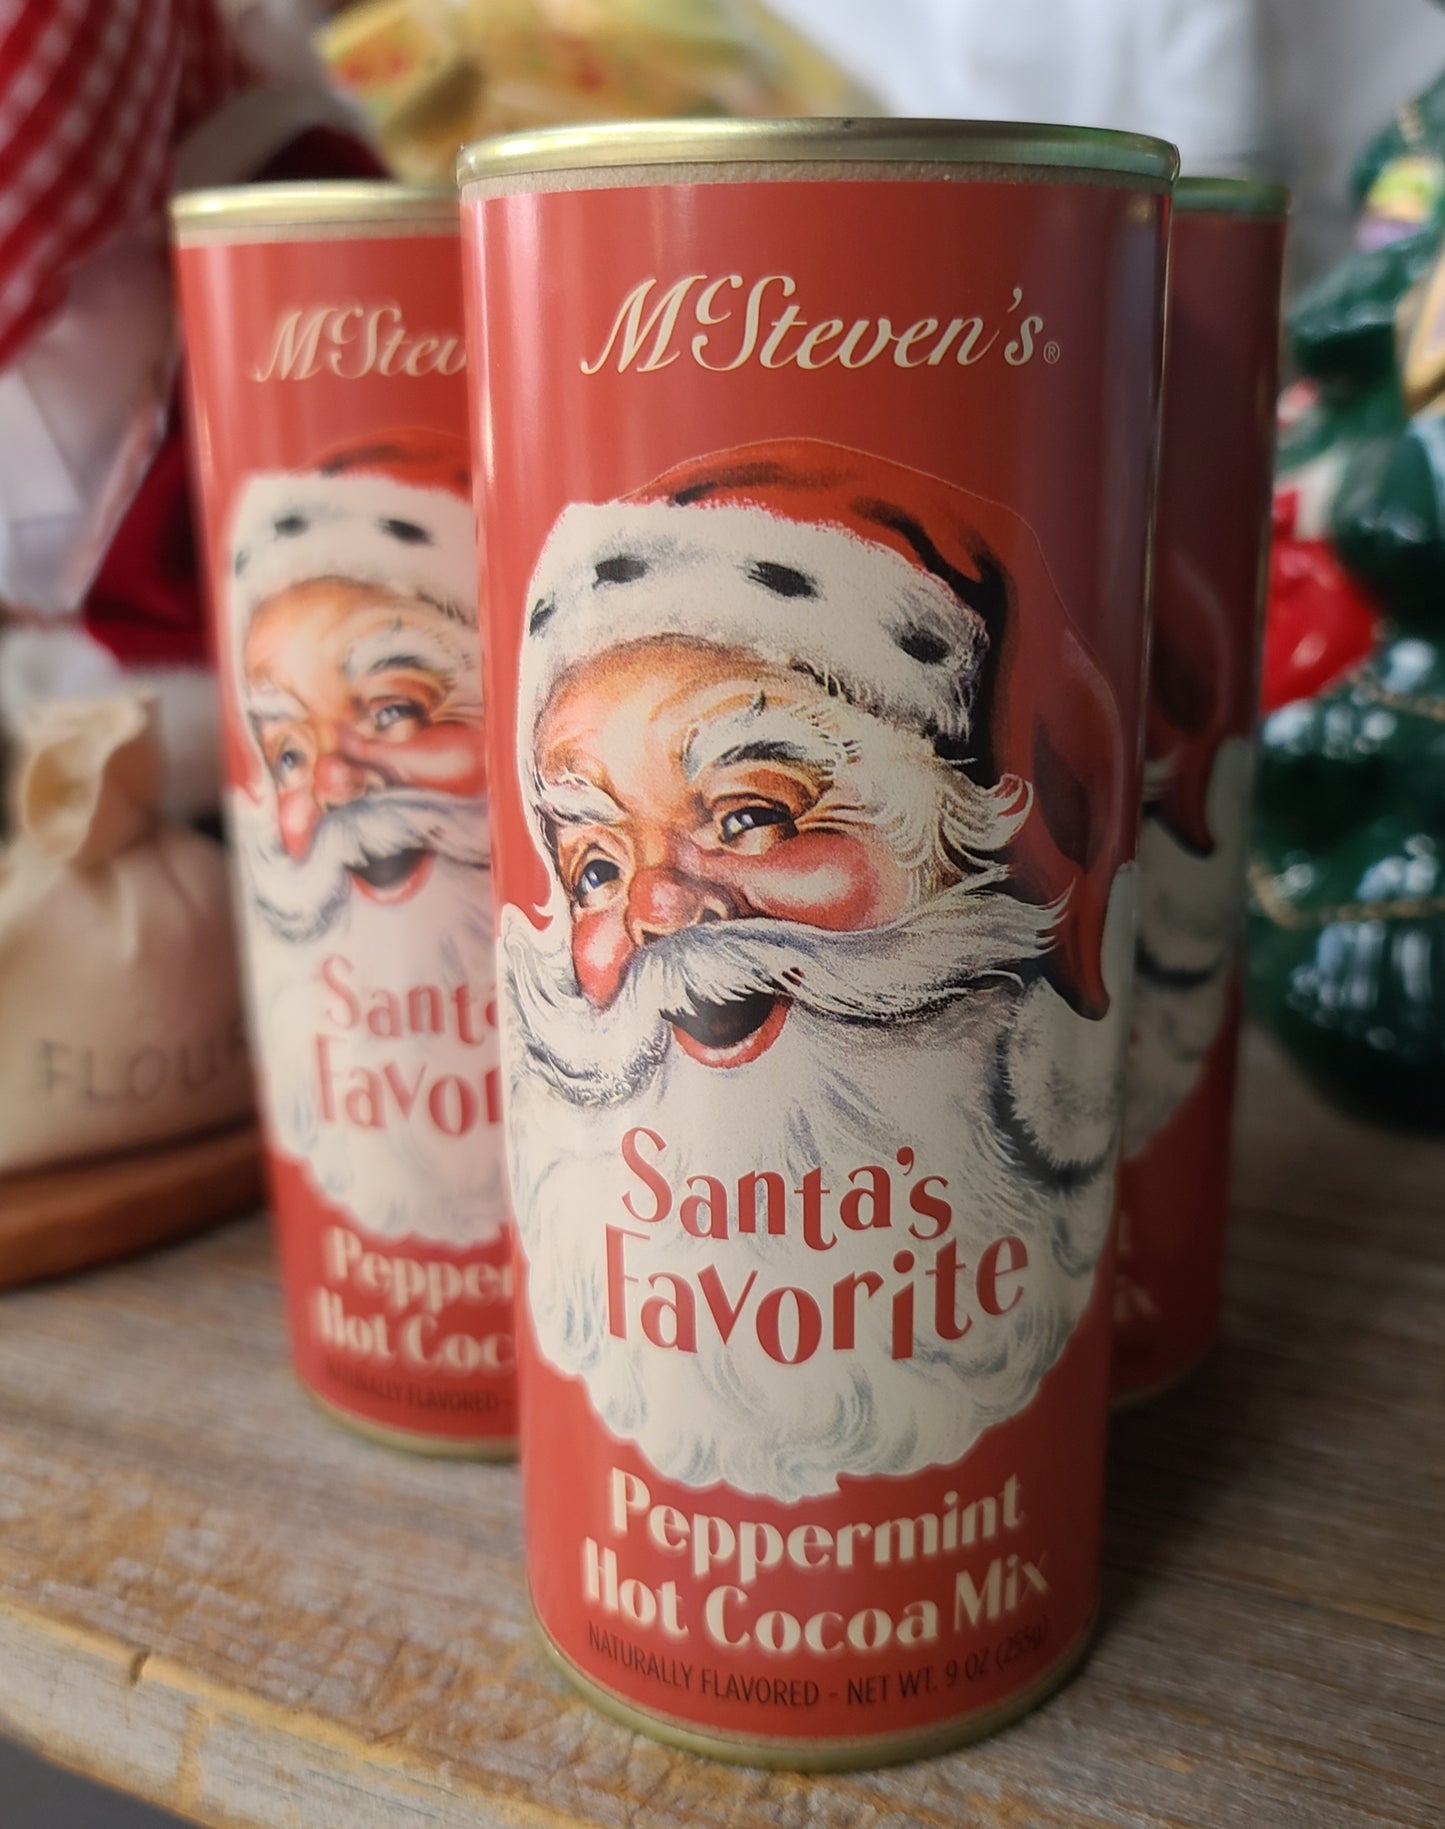 Santa's Favorite Peppermint Cocoa Mix